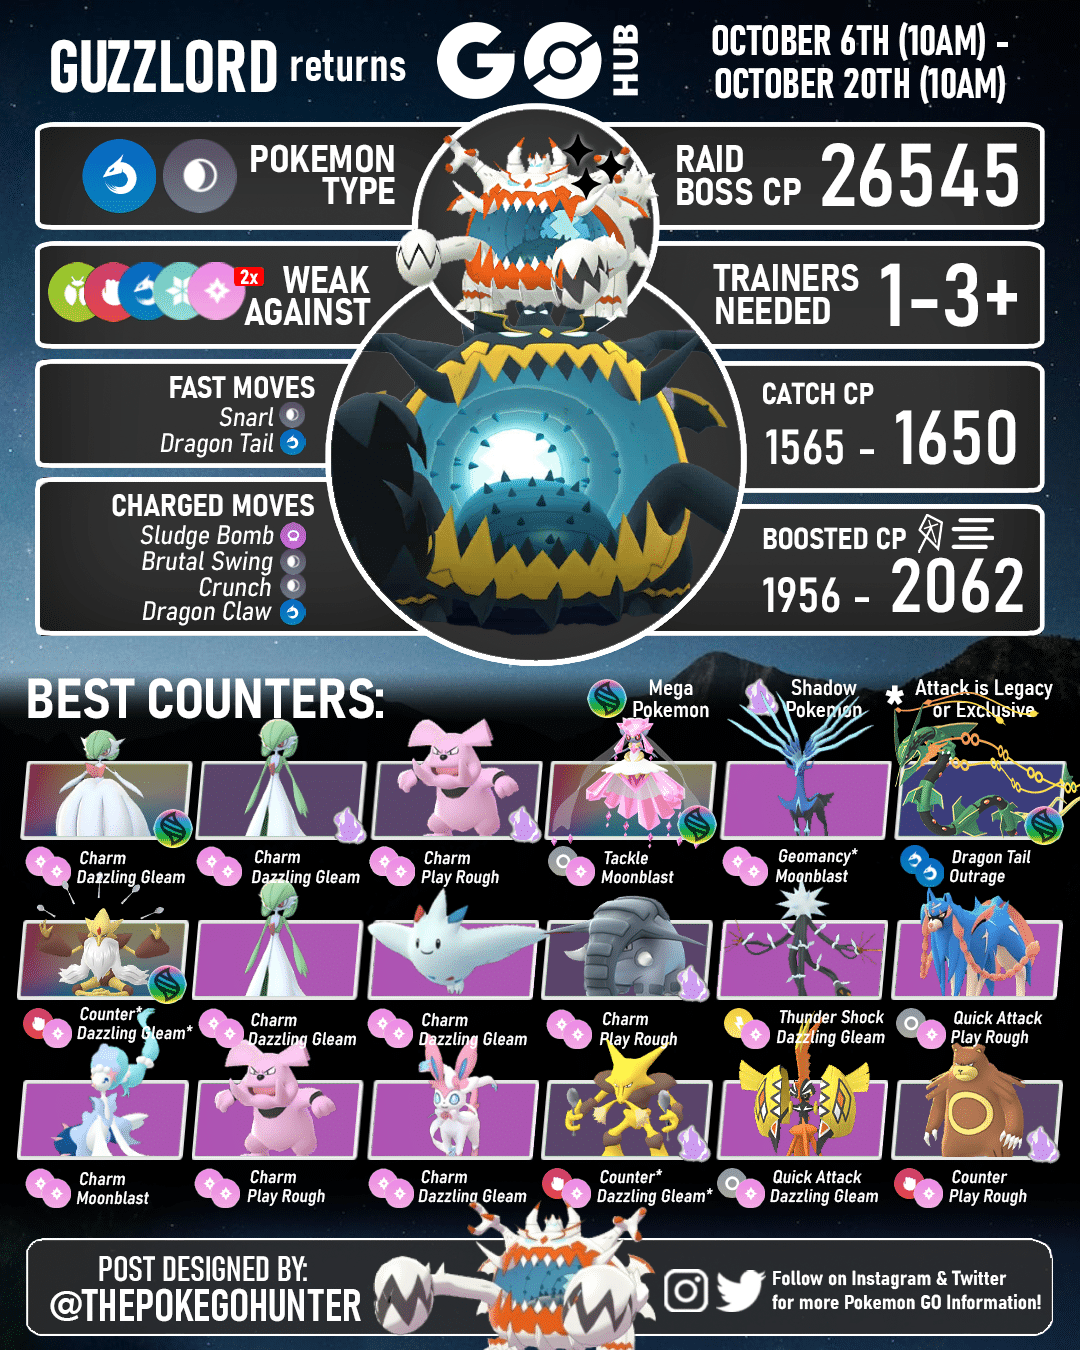 Pokemon Go Guzzlord Raid Guide: Best Counters, Weaknesses, Raid